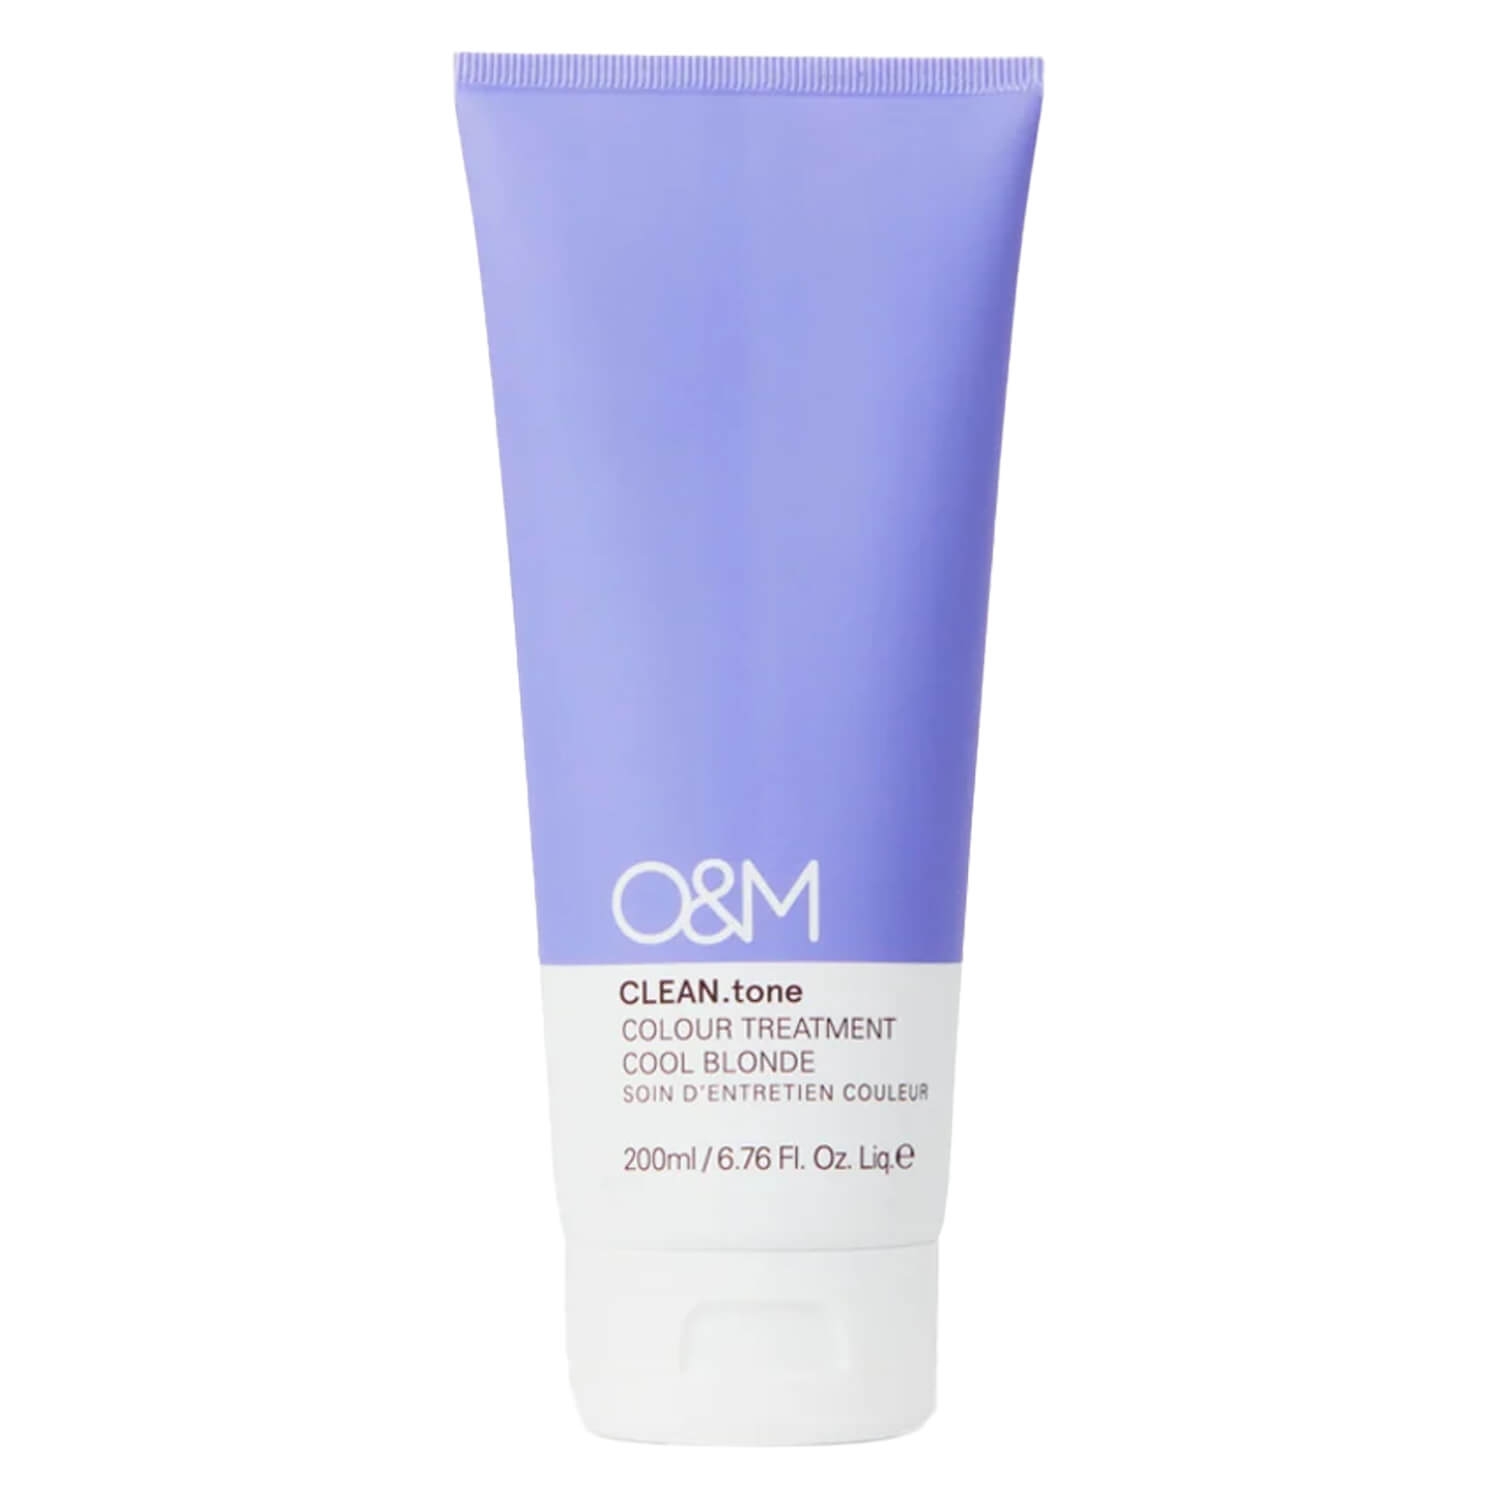 Produktbild von O&M Haircare - CLEAN.tone Color Treatment Cool Blonde